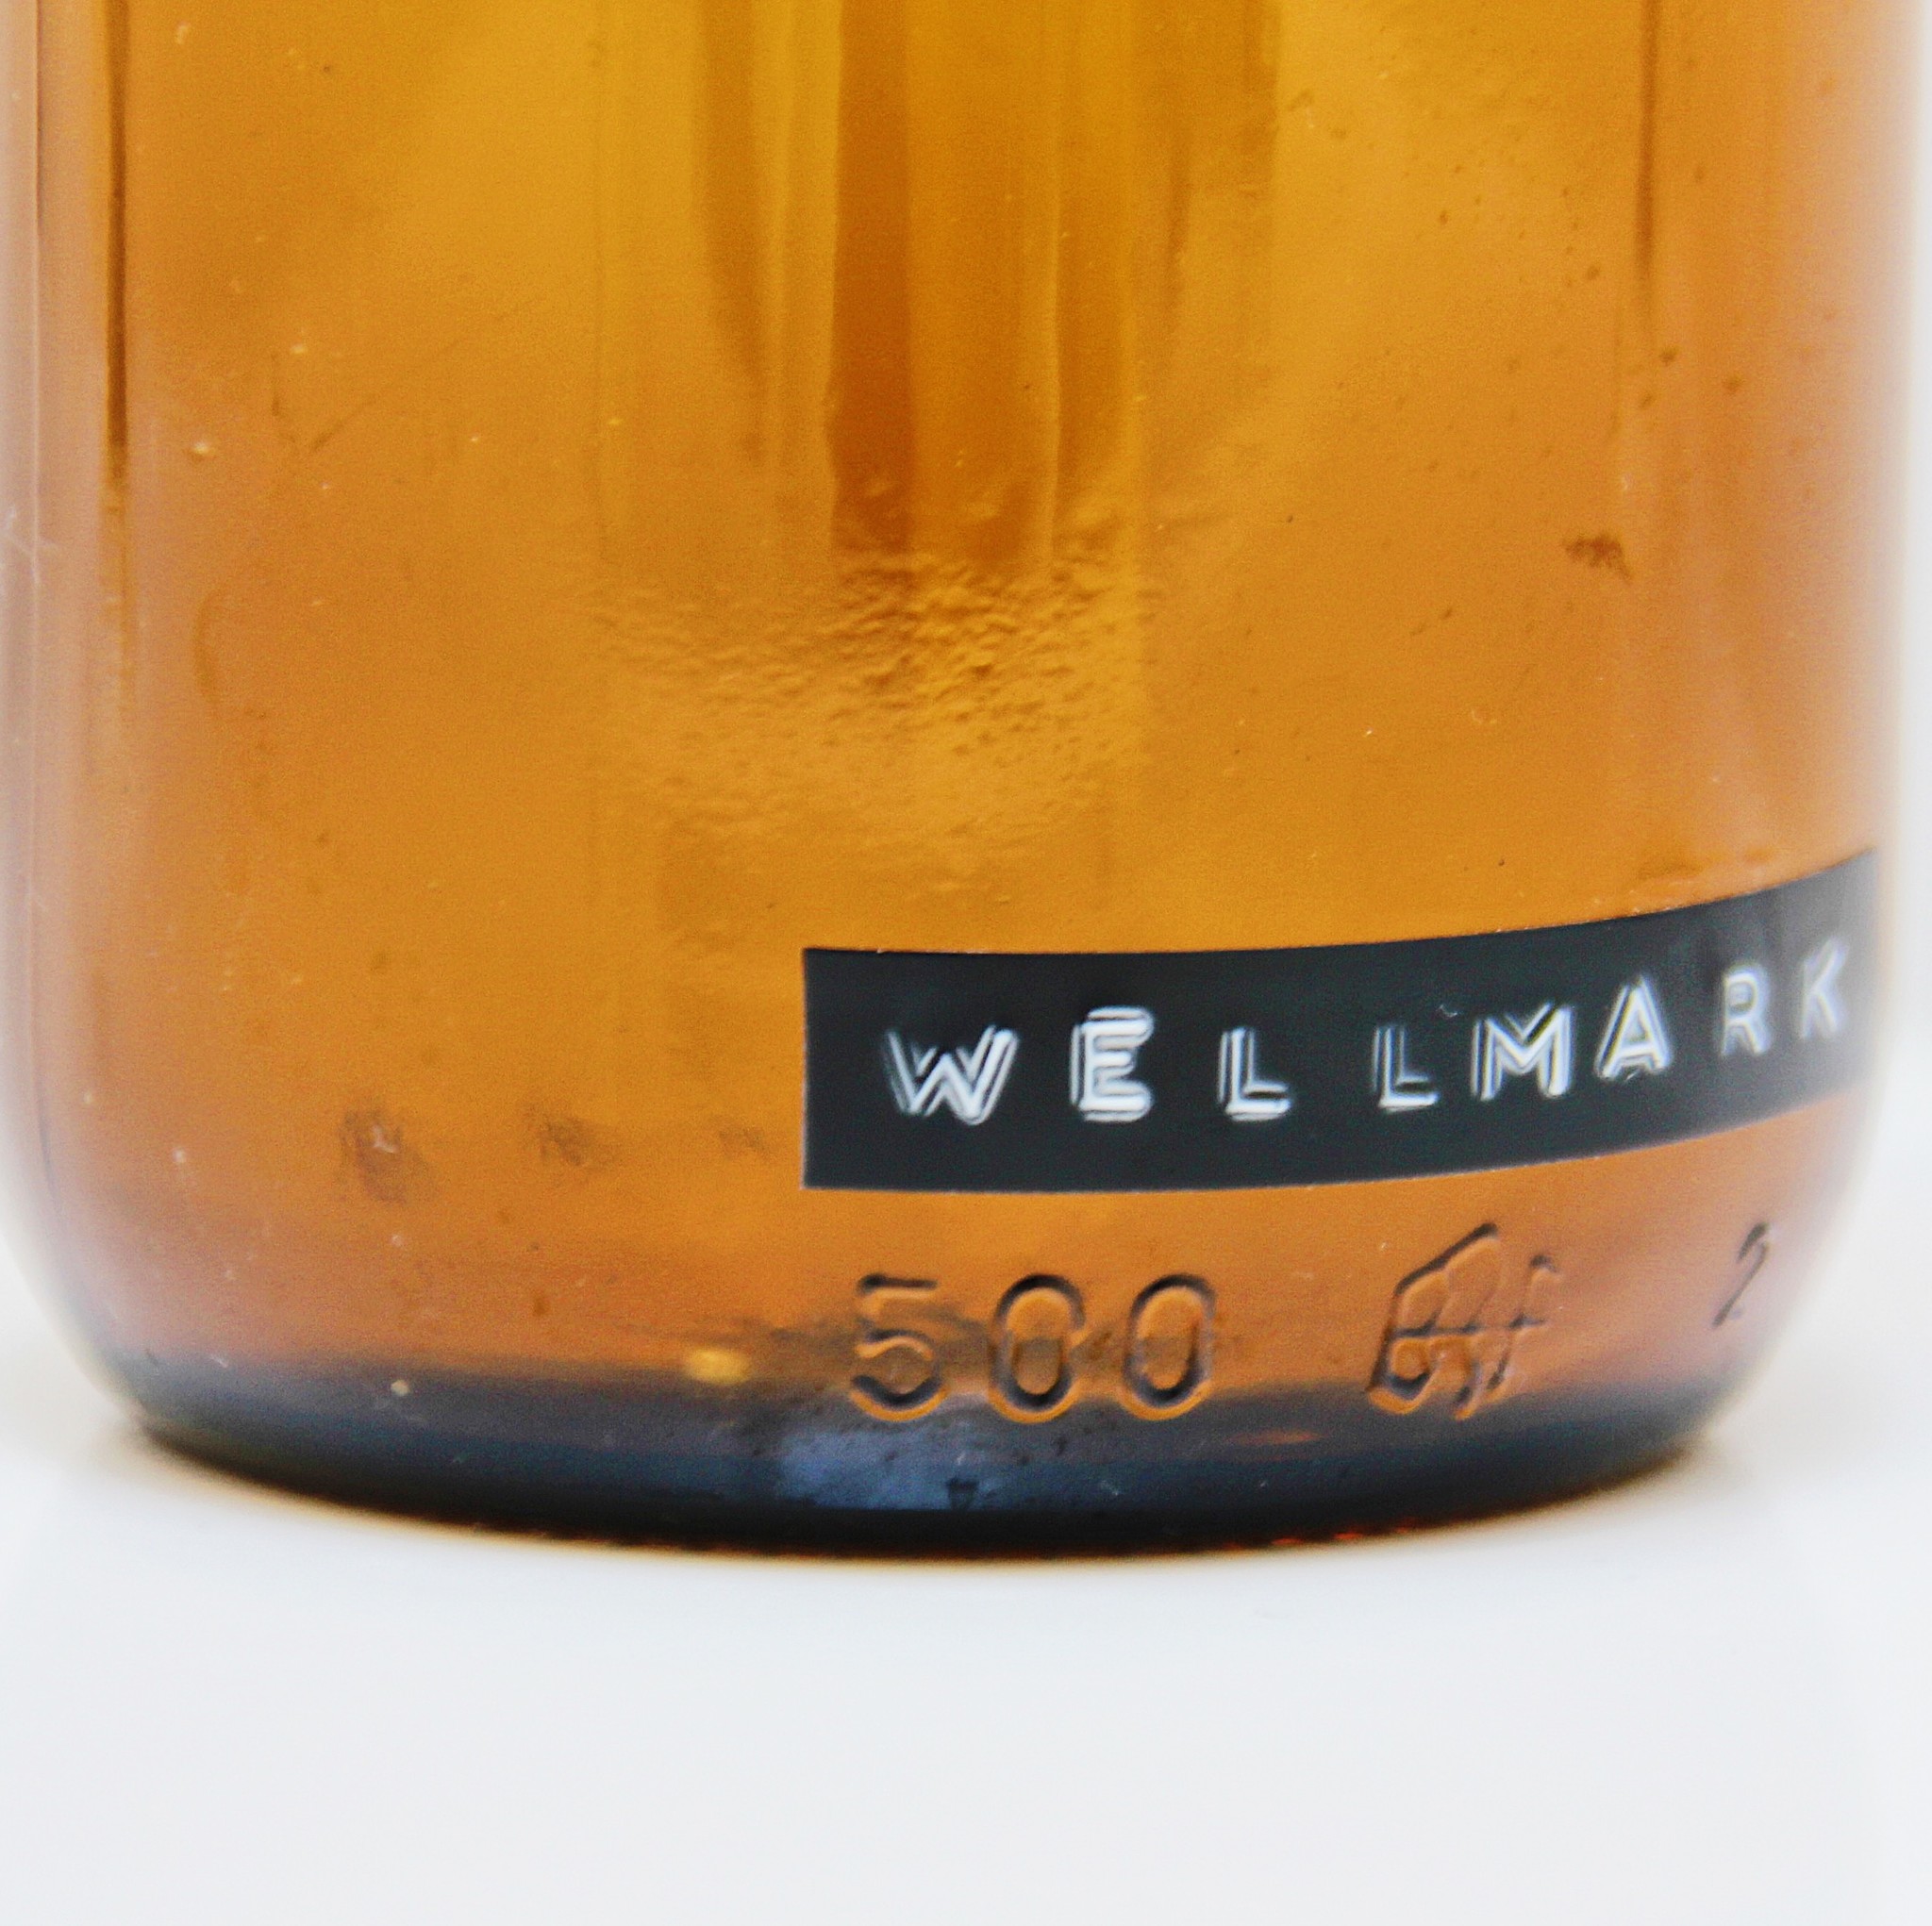 Wellmark Afwasmiddel in glas - zwart